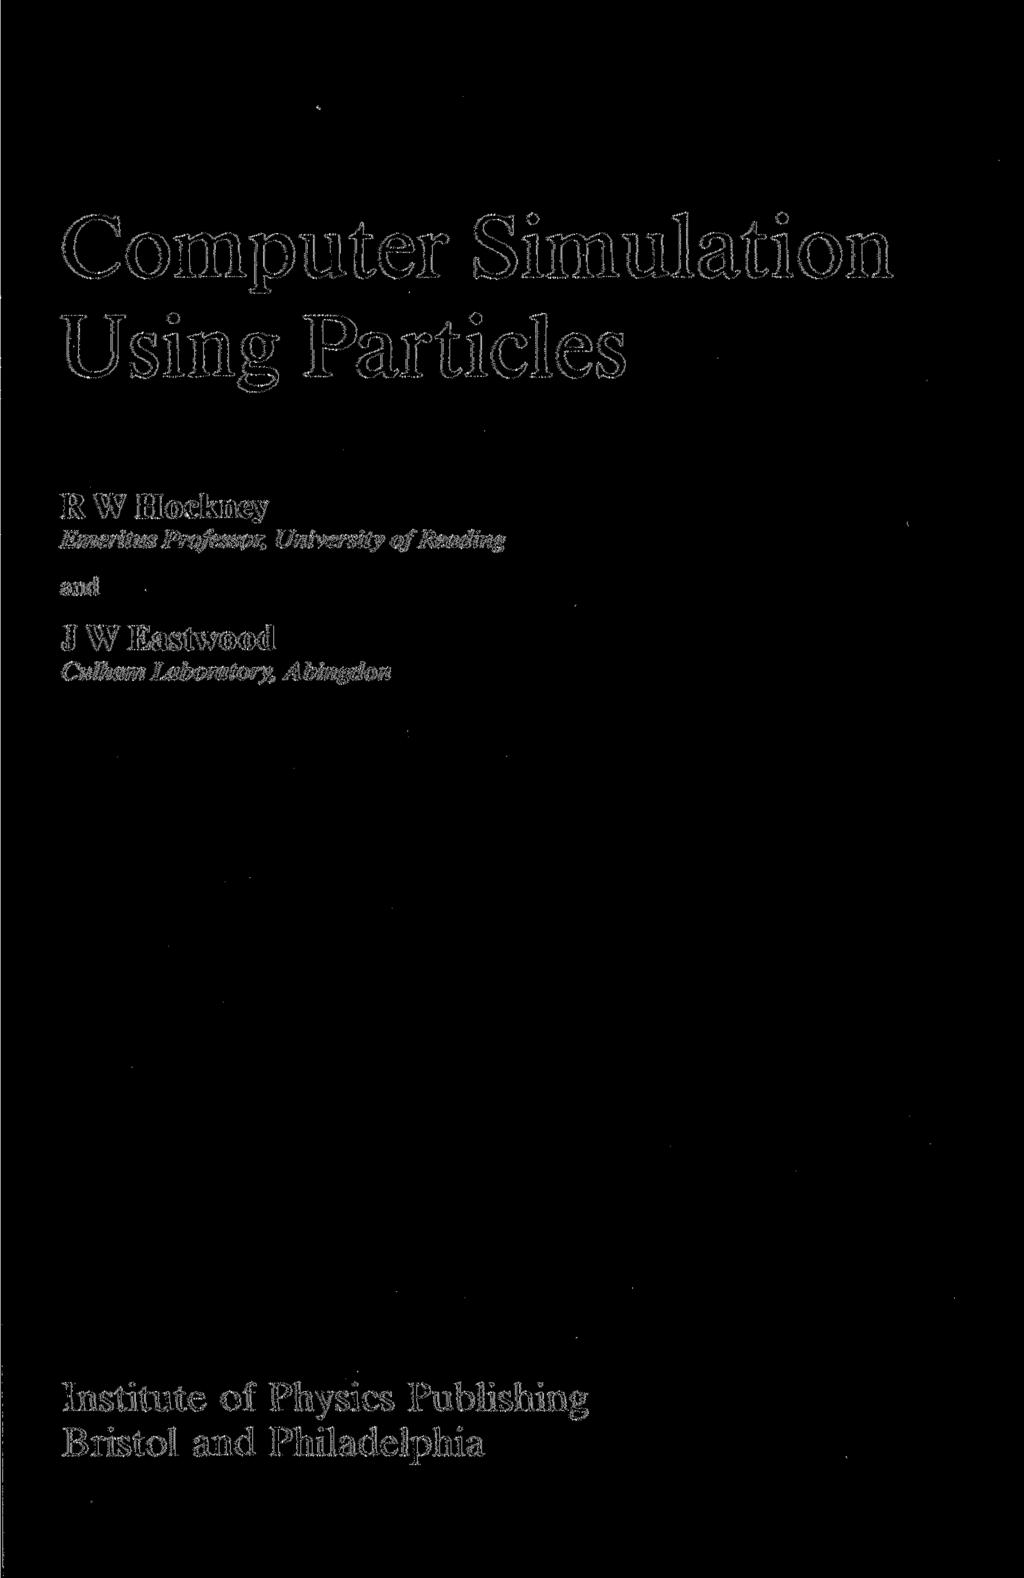 Computer Simulation Using Particles R W Hockney Emeritus Professor, University ofreading and J